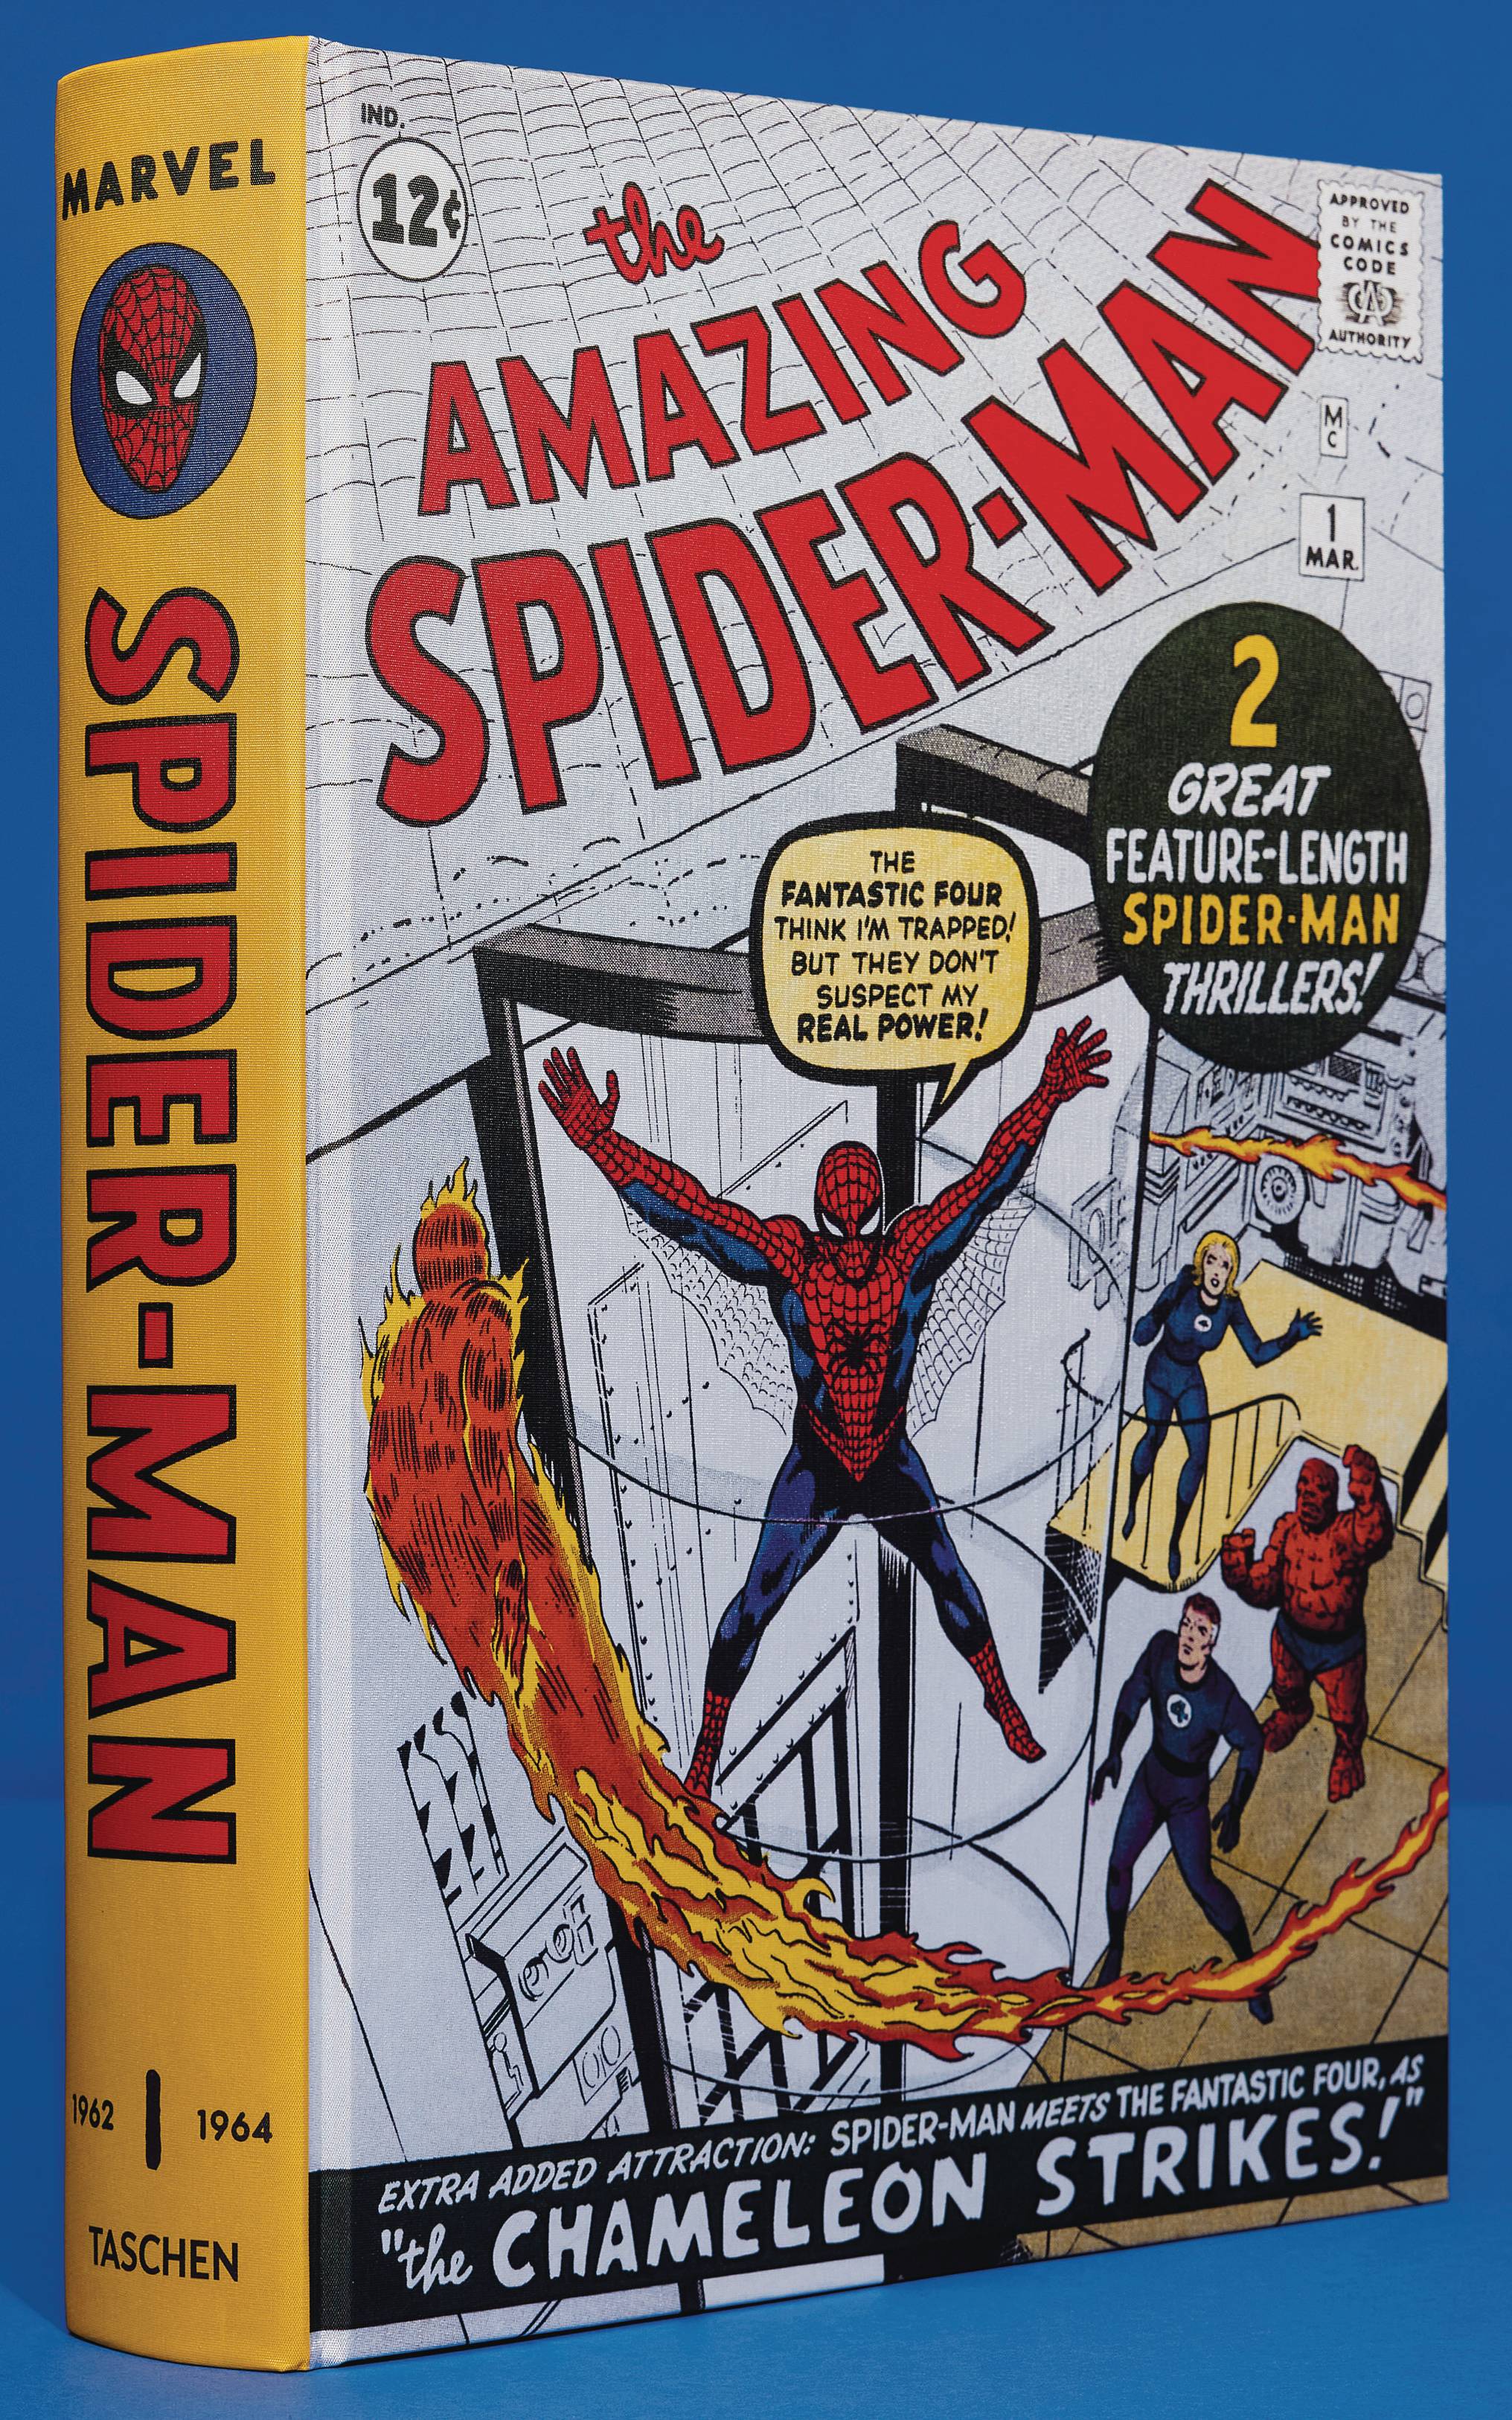 MARVEL COMICS LIBRARY HC VOL 01 SPIDER-MAN